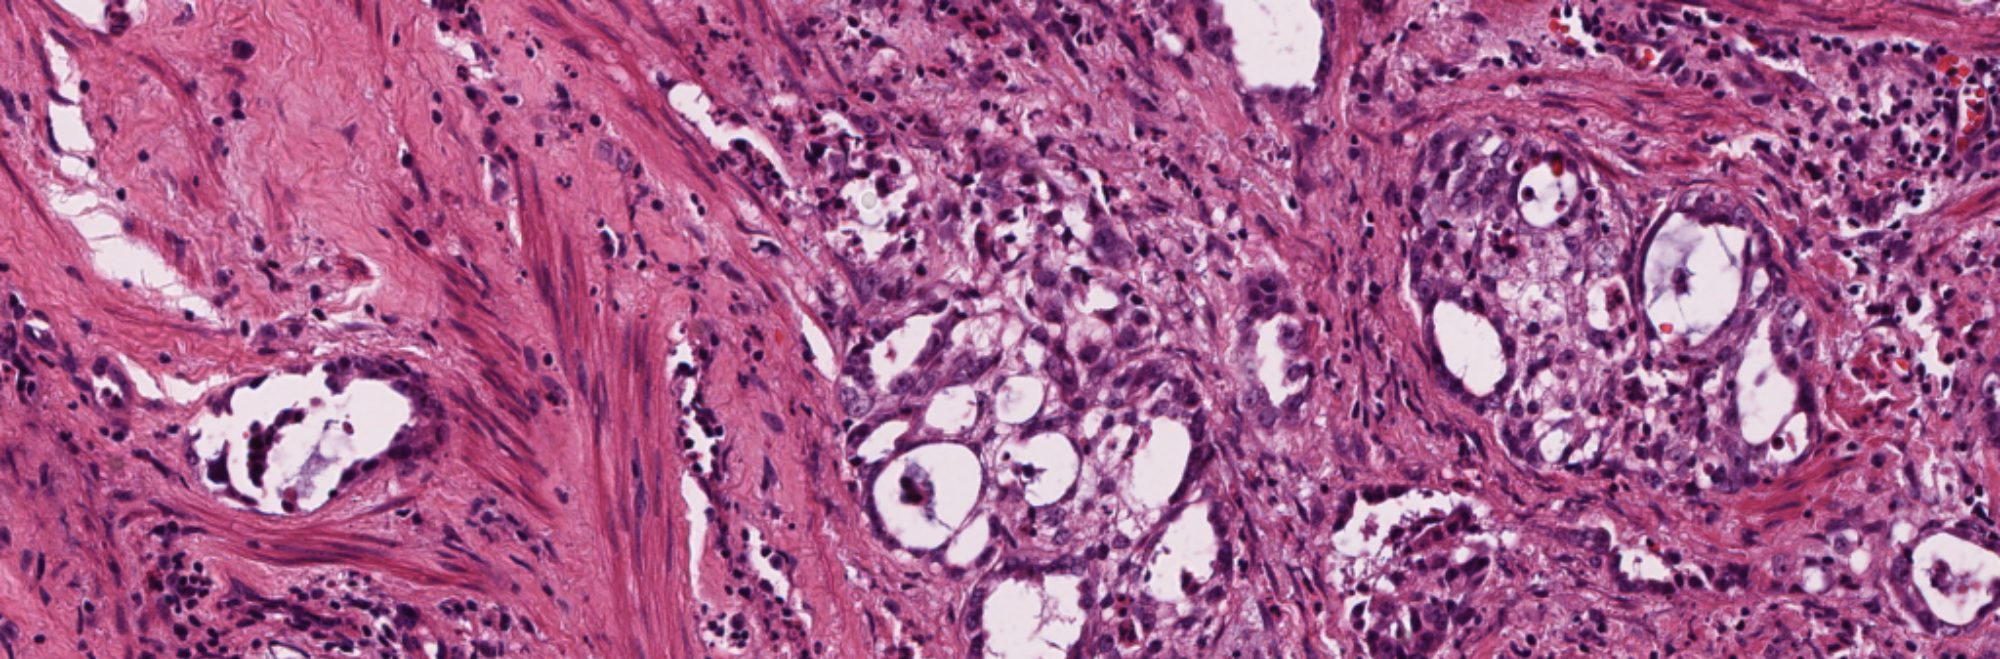 Urethra adenocarcinoma